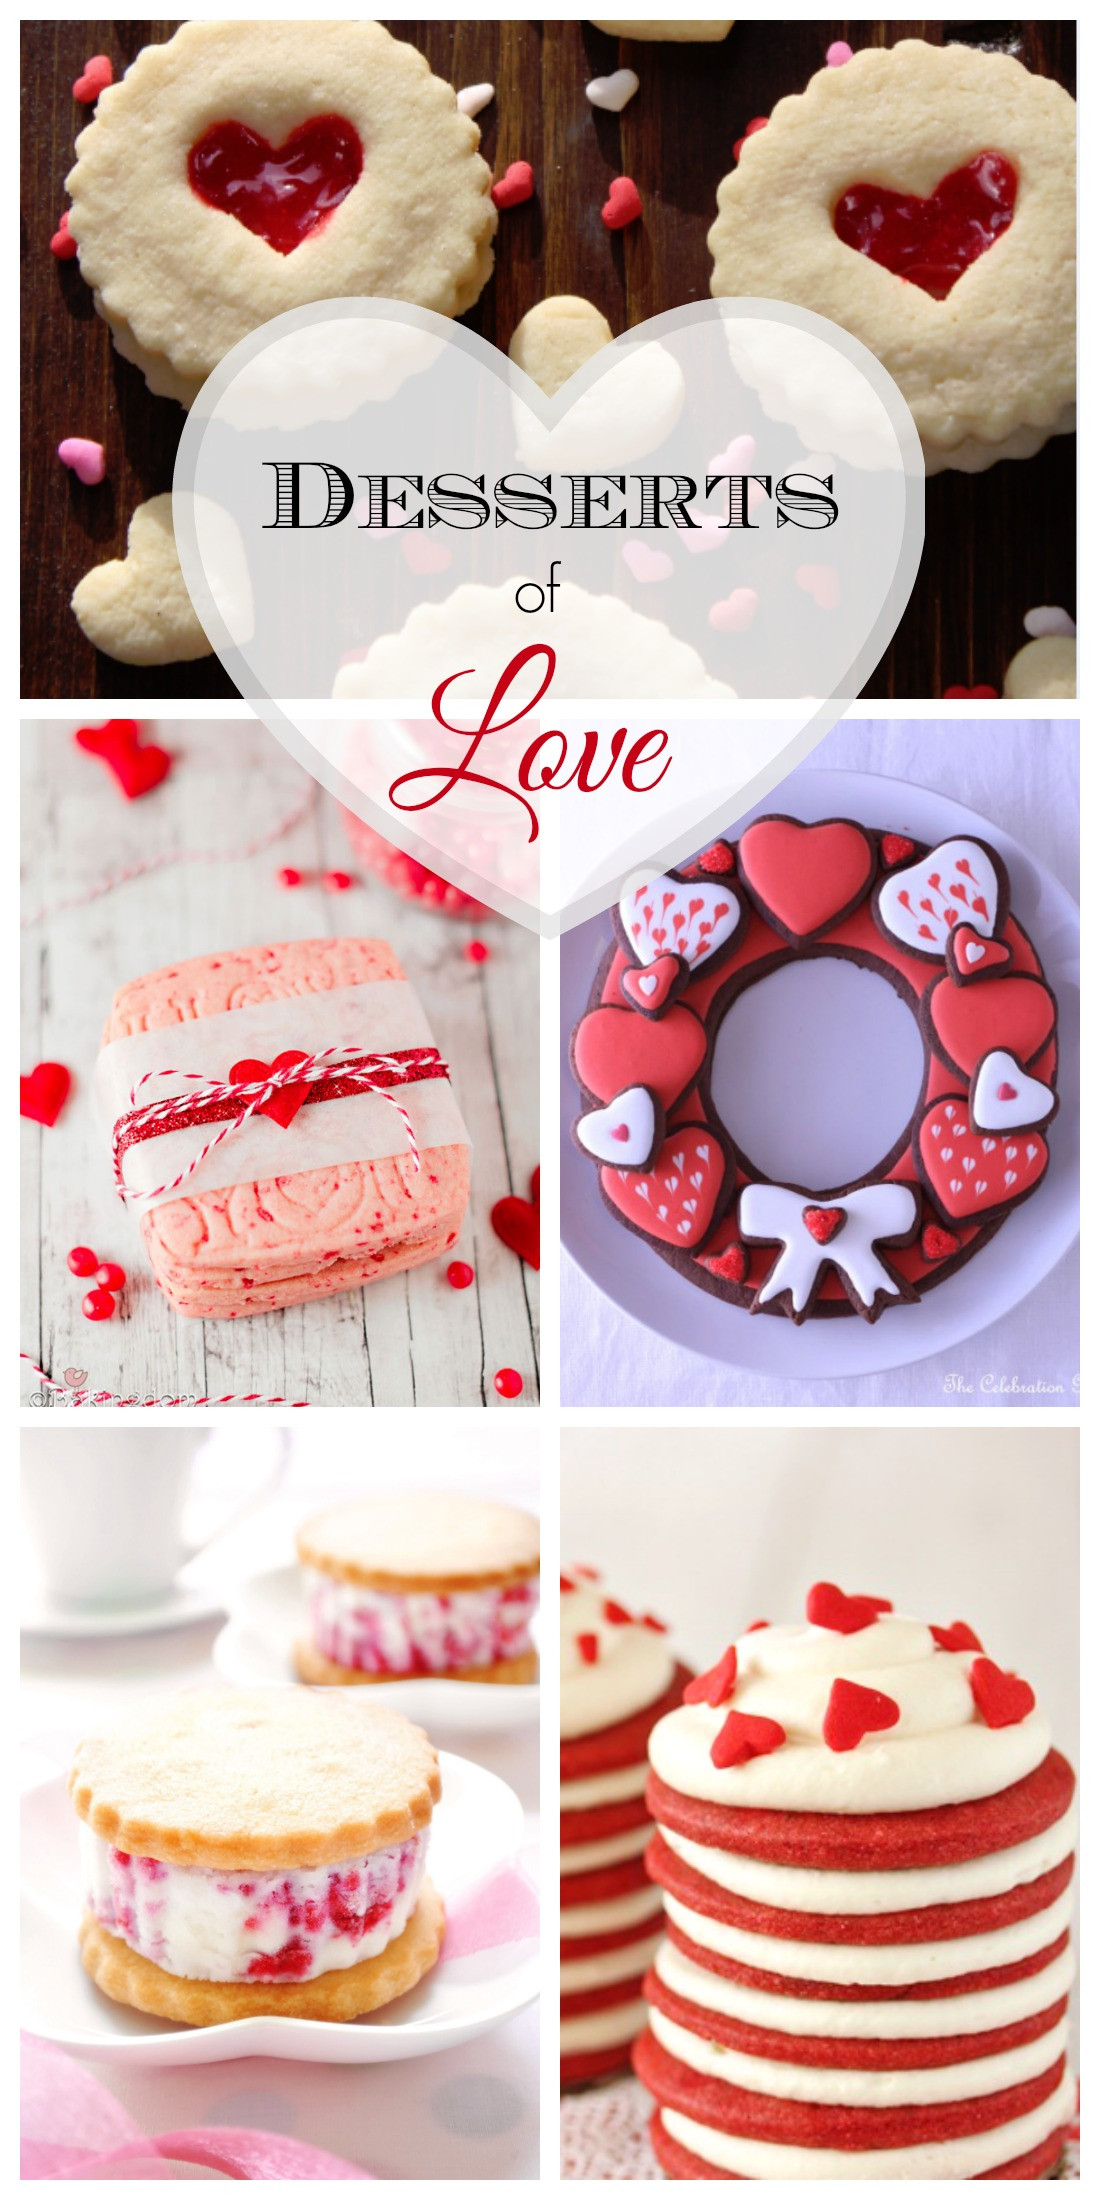 Valentine'S Day Desserts
 14 Desserts That Will Make You Fall in Love on Valentine s